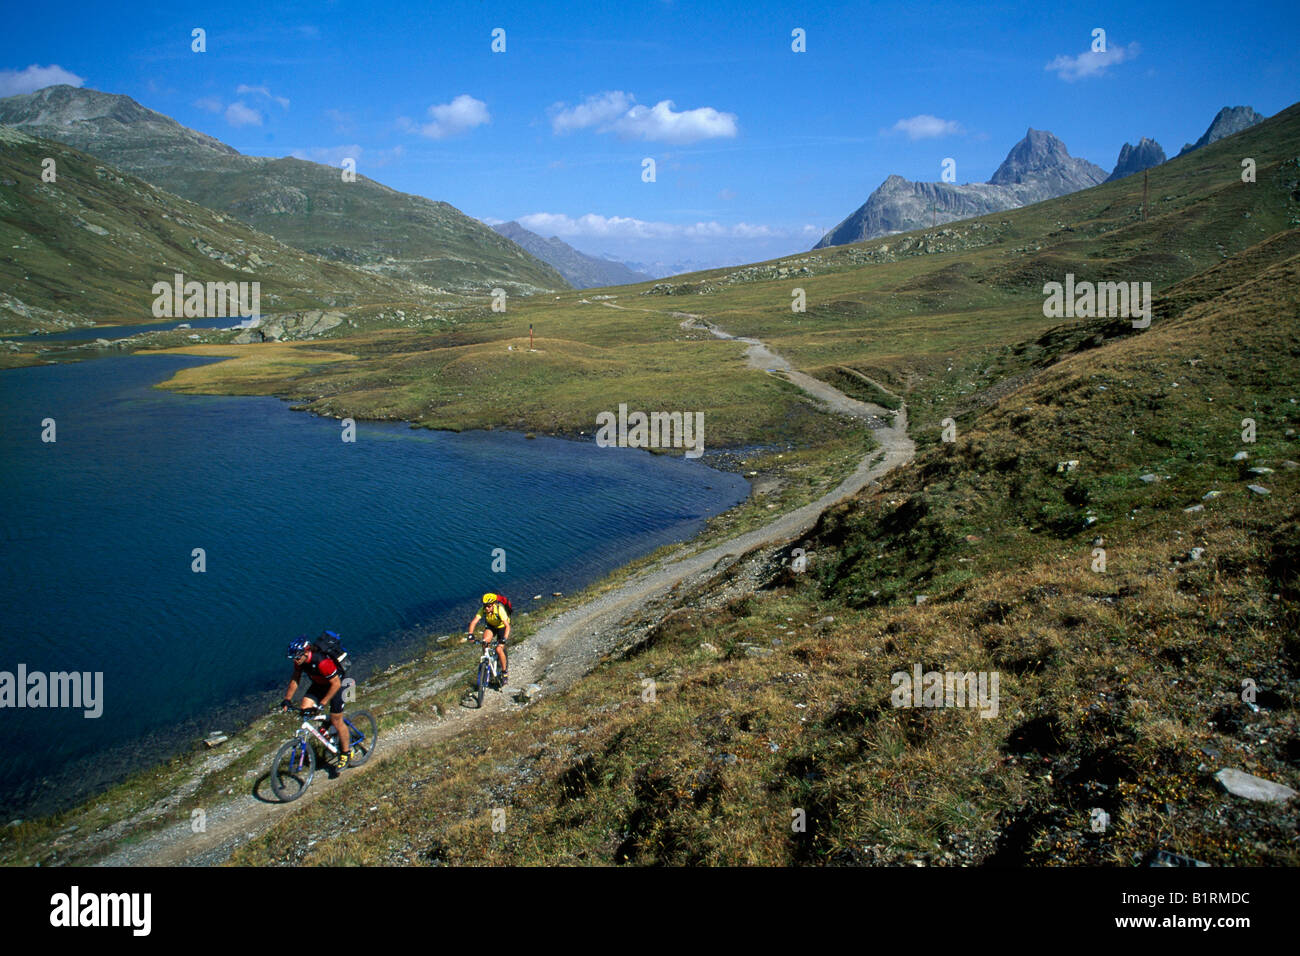 Biker, Schoenverwalltal valley, transalp, Tyrol, Austria Stock Photo